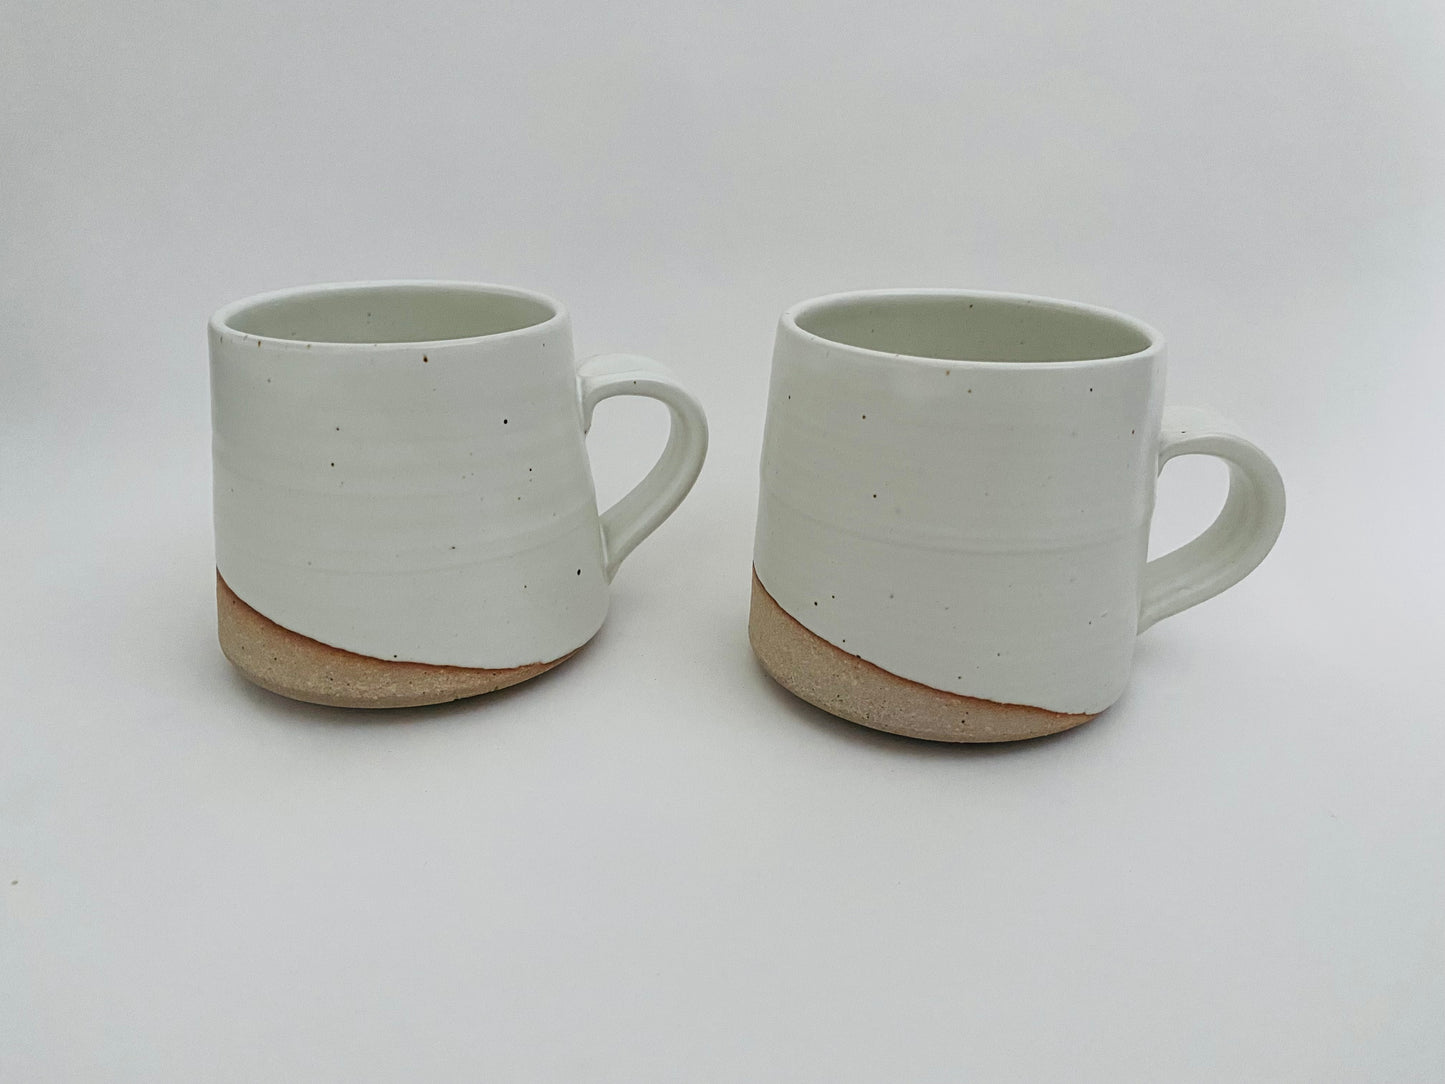 A pair of white mugs